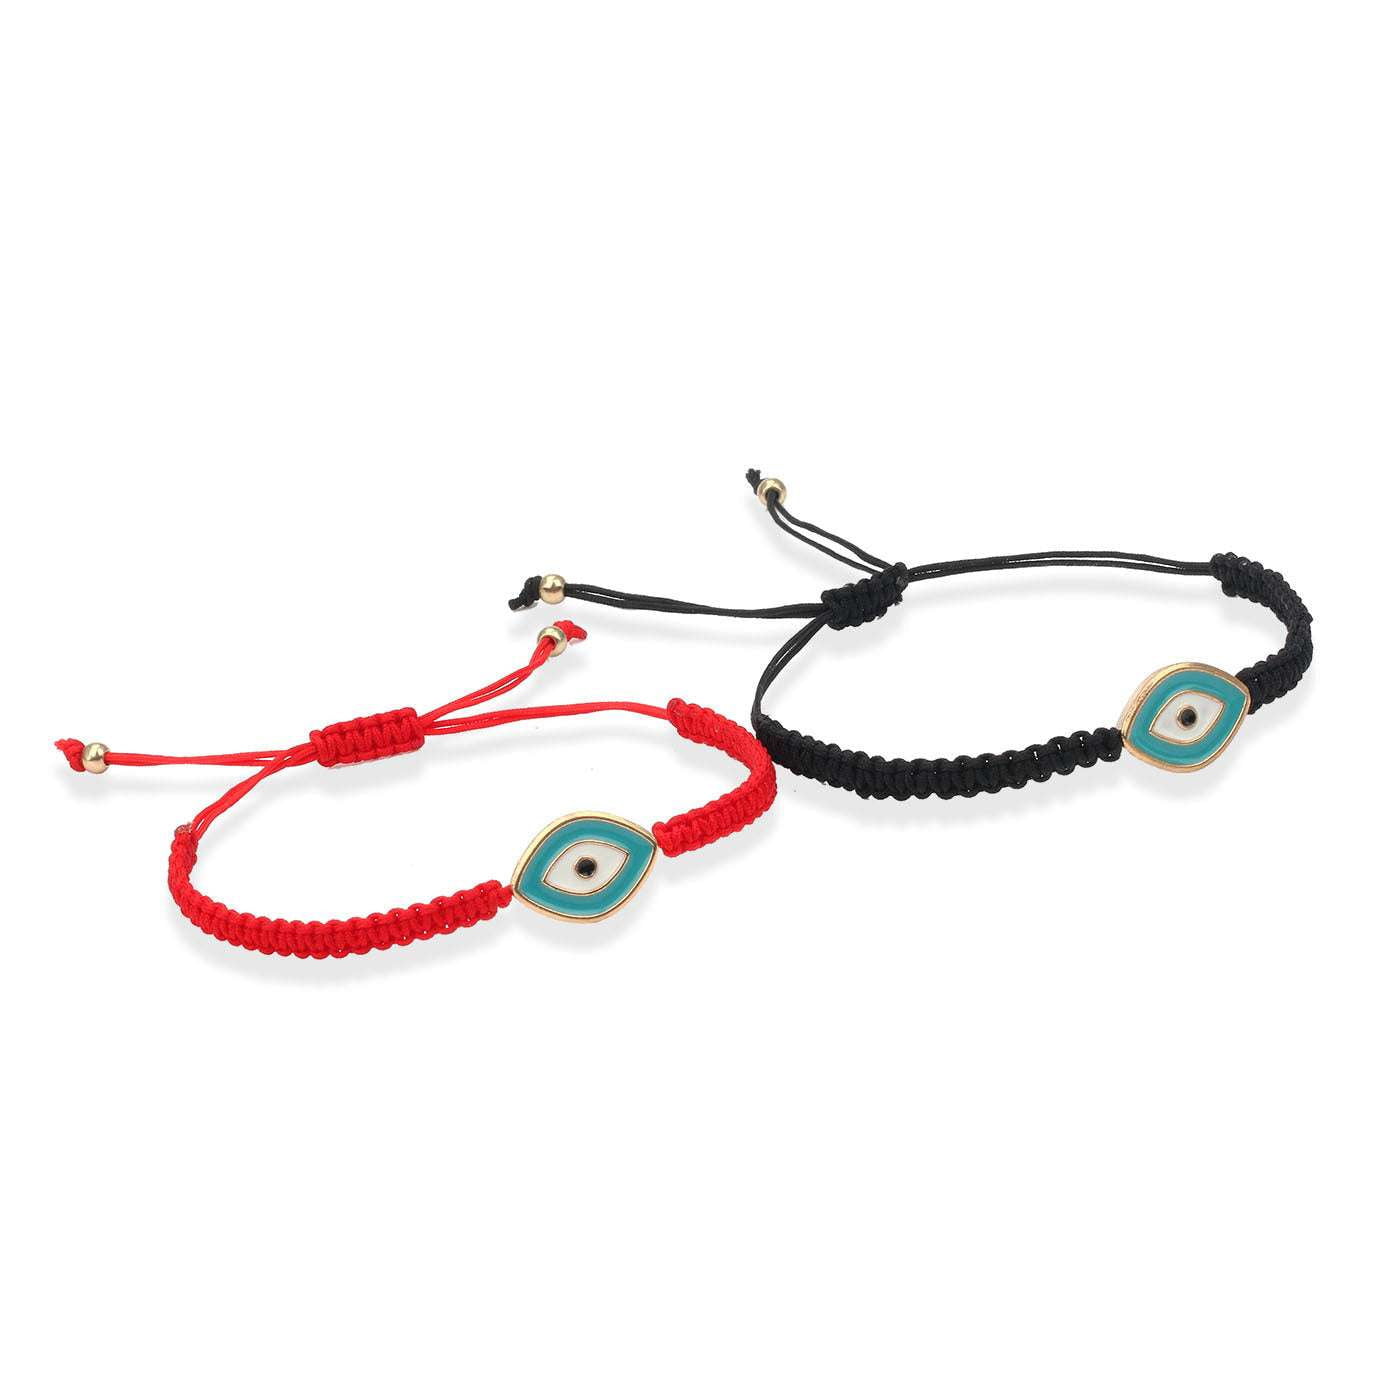 Adjustable Eye Bracelet, European Style Bracelet, Lucky Charm Bracelet - available at Sparq Mart